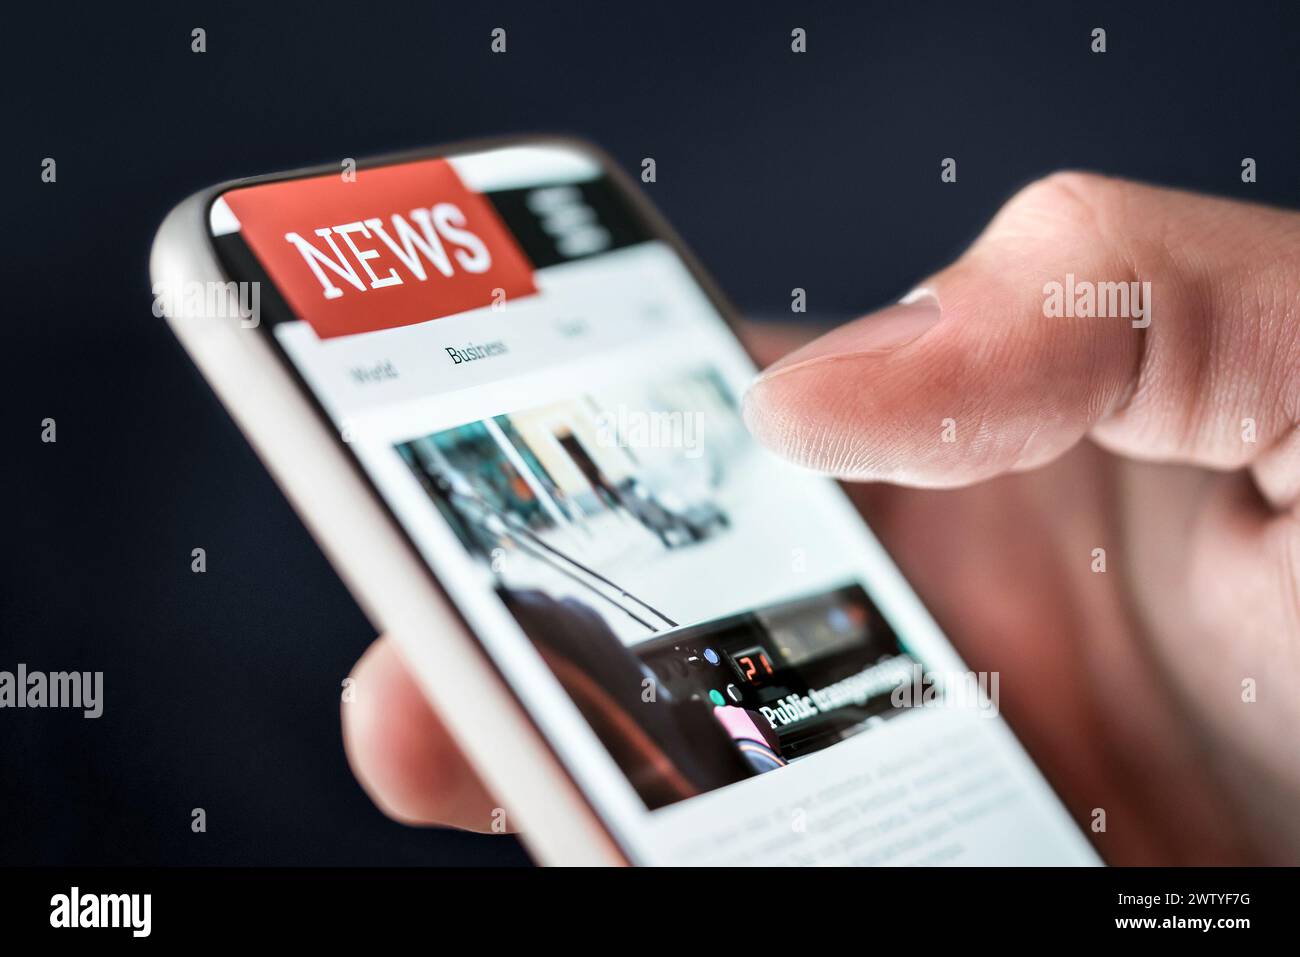 News in phone. Online newspaper article. Digital press publication. Reading latest headlines on digital mobile publication website or app. Stock Photo